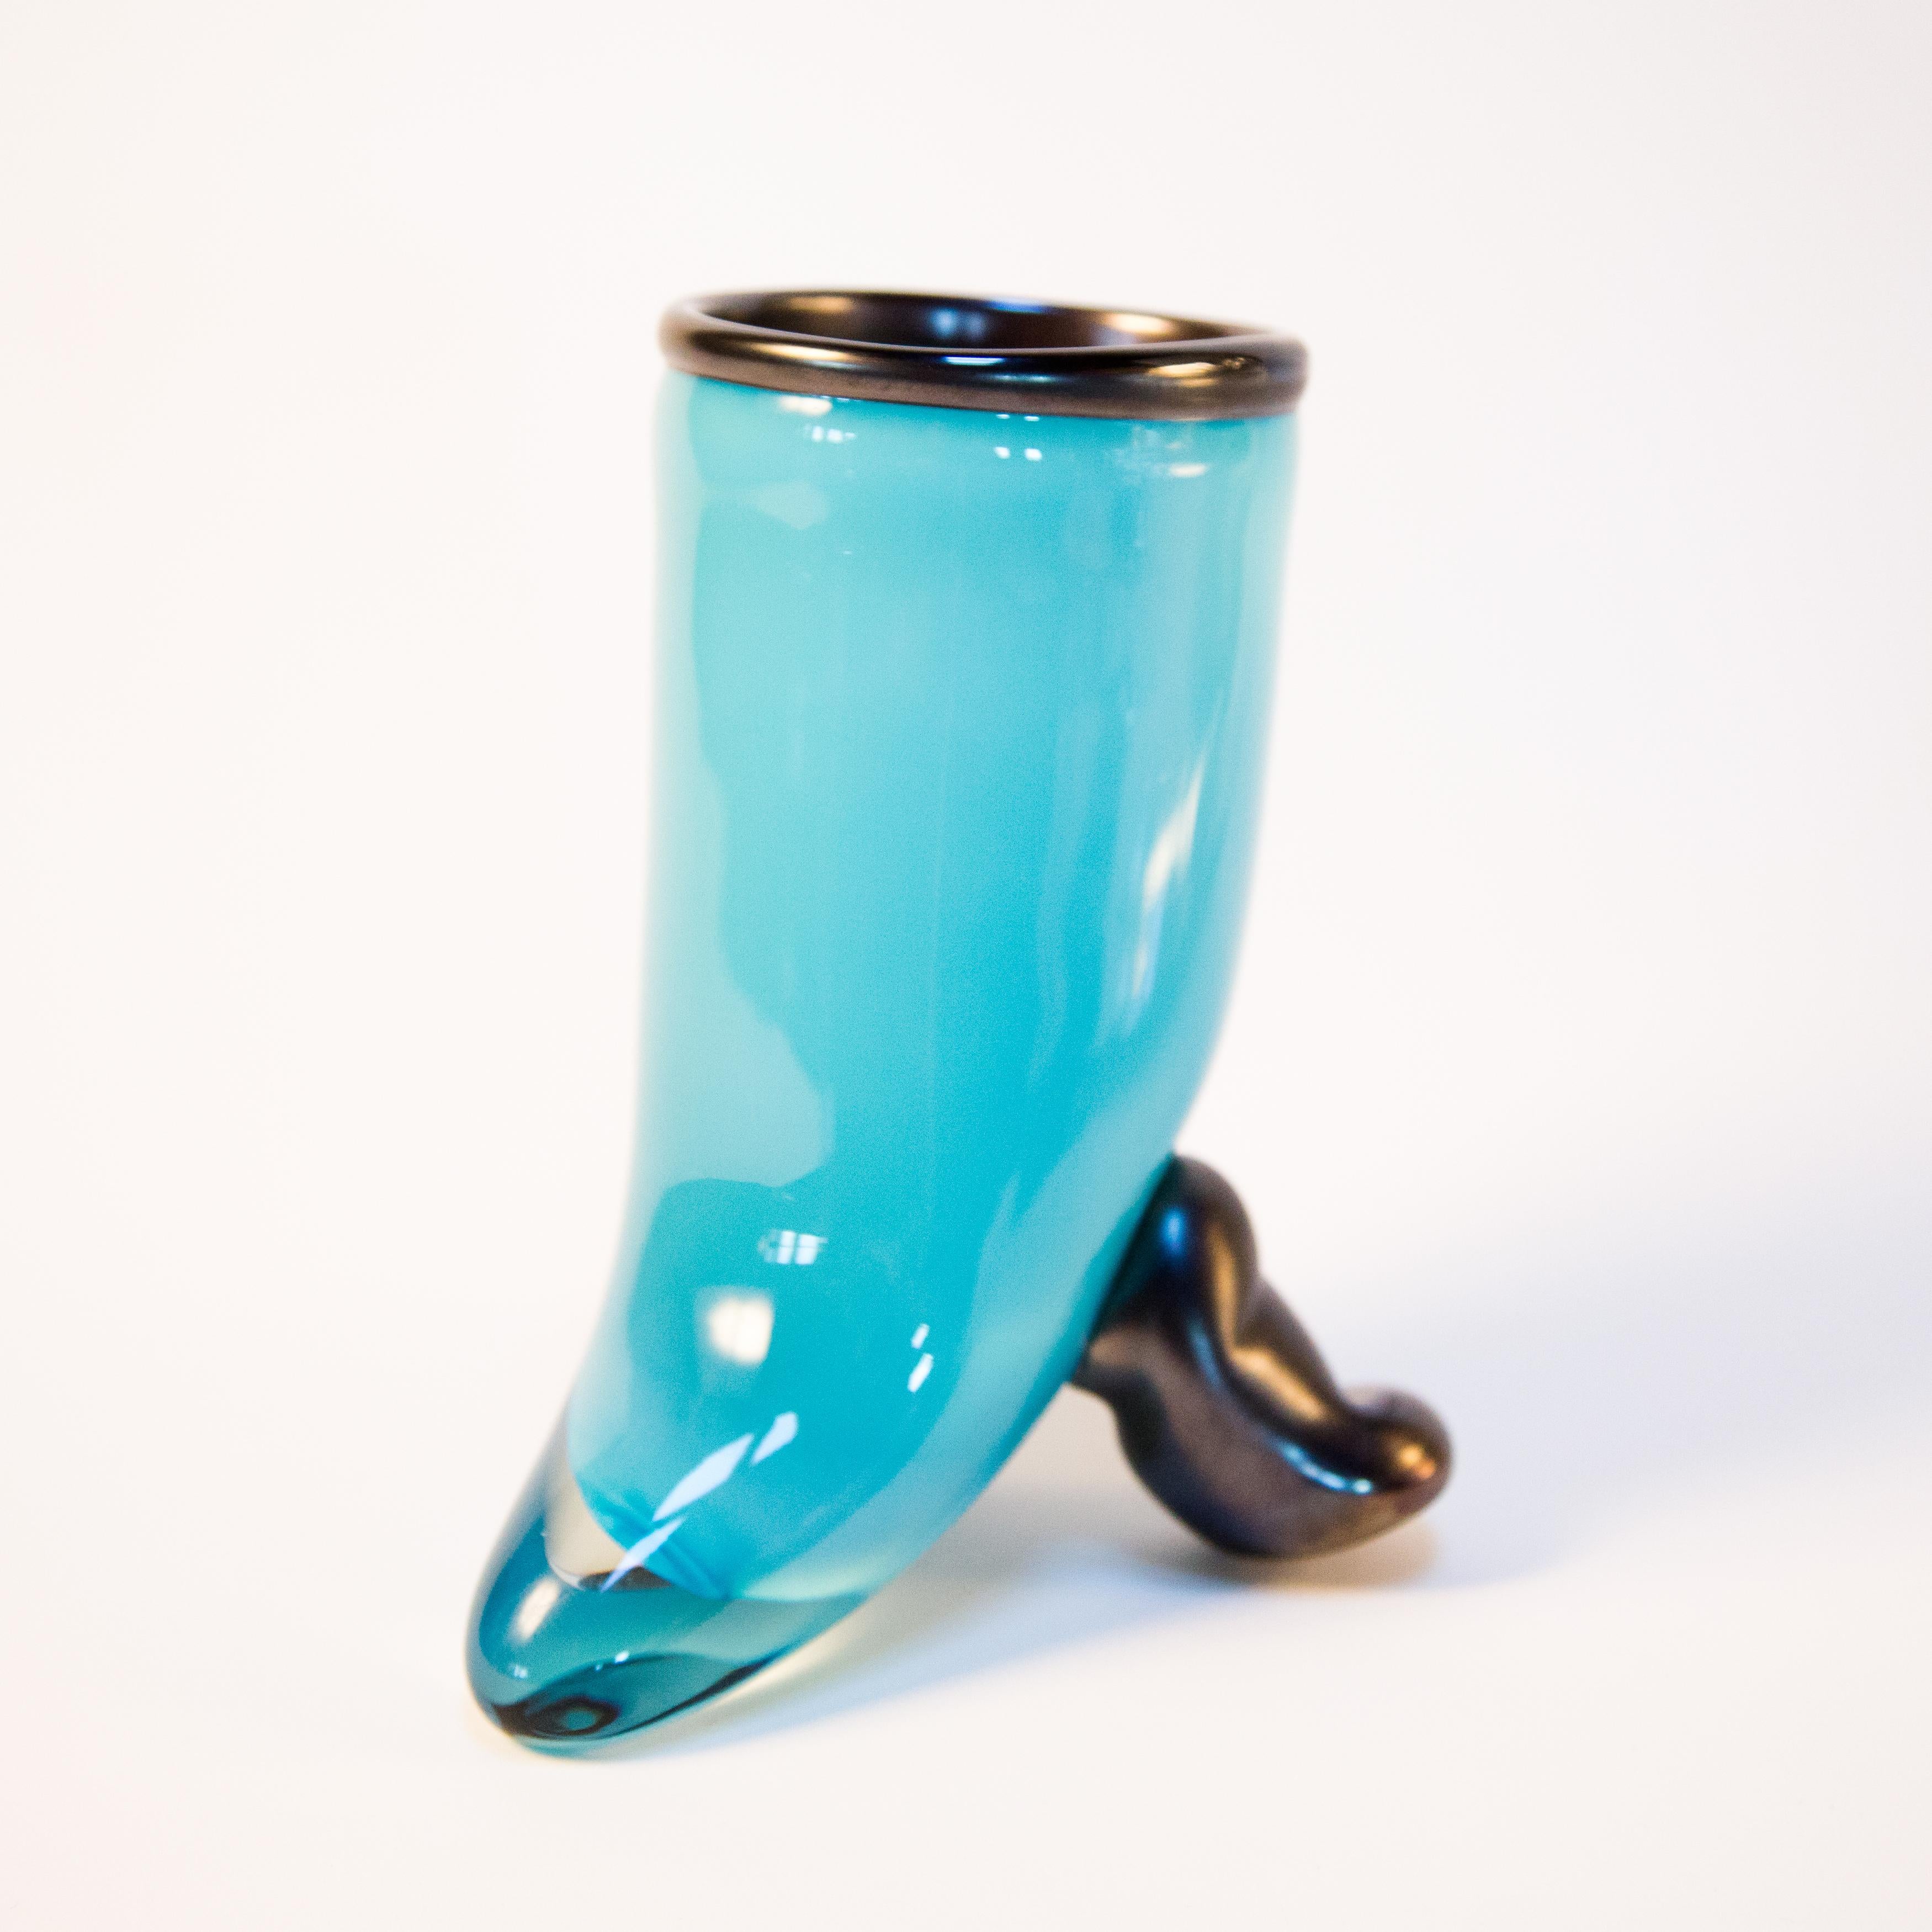 Hand-Crafted Turquoise Manga Mug Vases/Vessels Hand Blown Glass, Jordan Mozer, USA, 1992-2018 For Sale